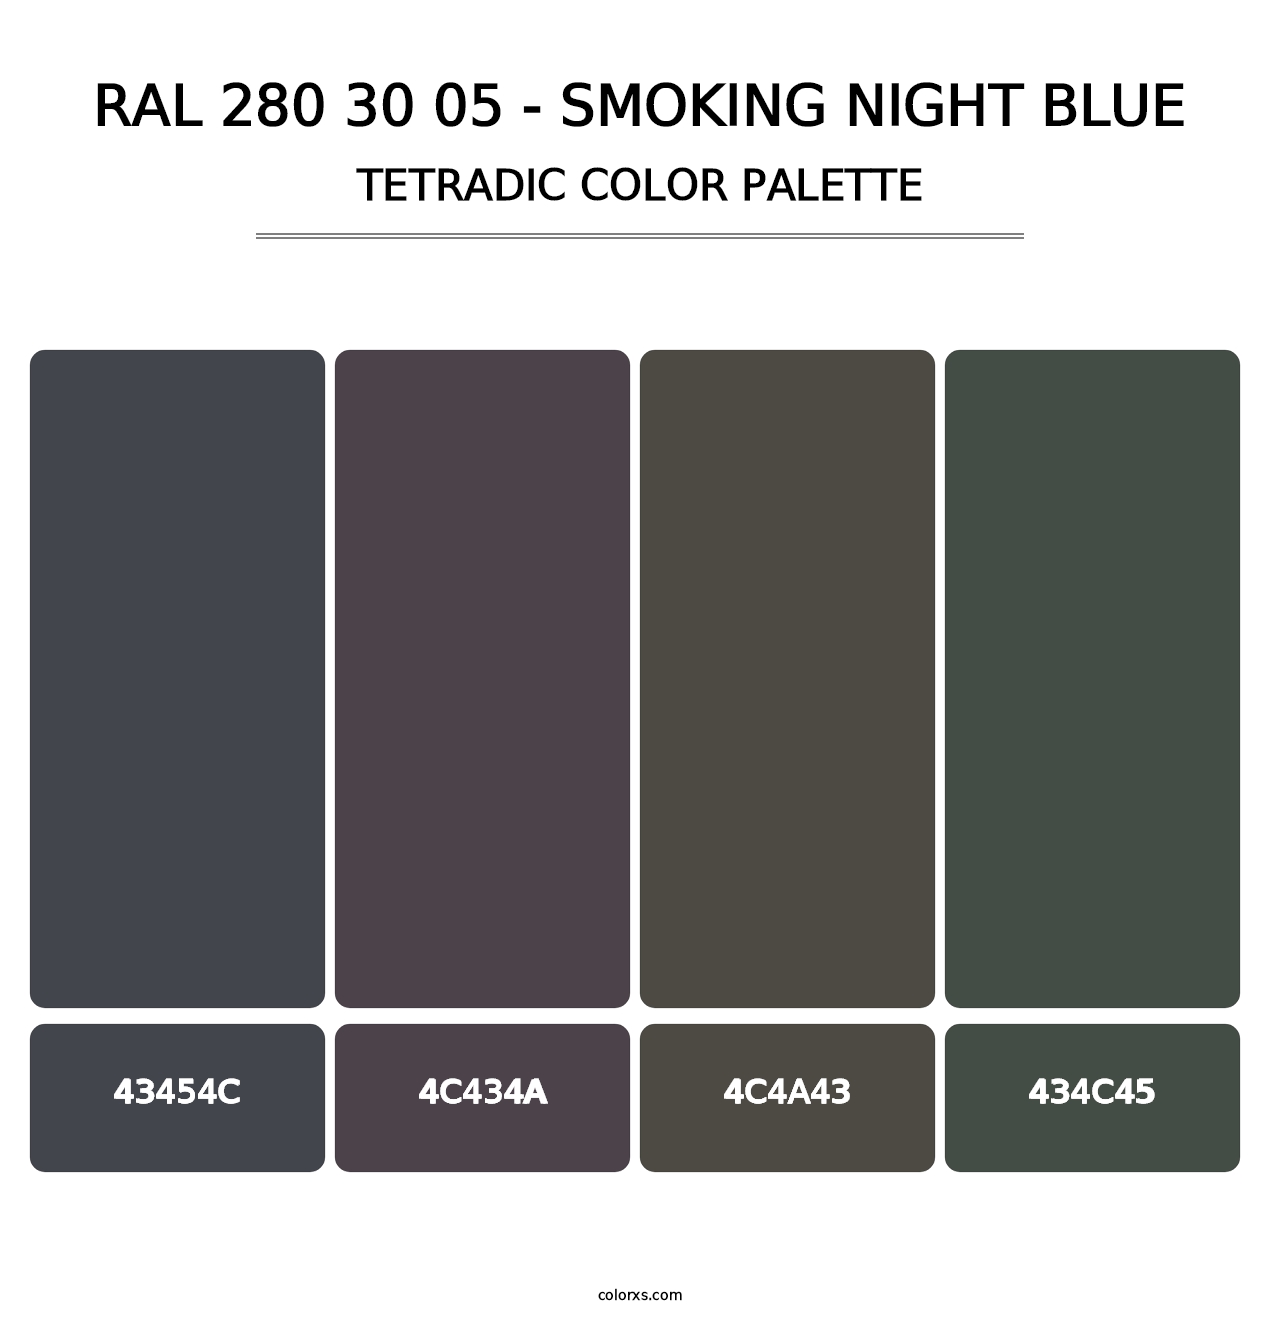 RAL 280 30 05 - Smoking Night Blue - Tetradic Color Palette